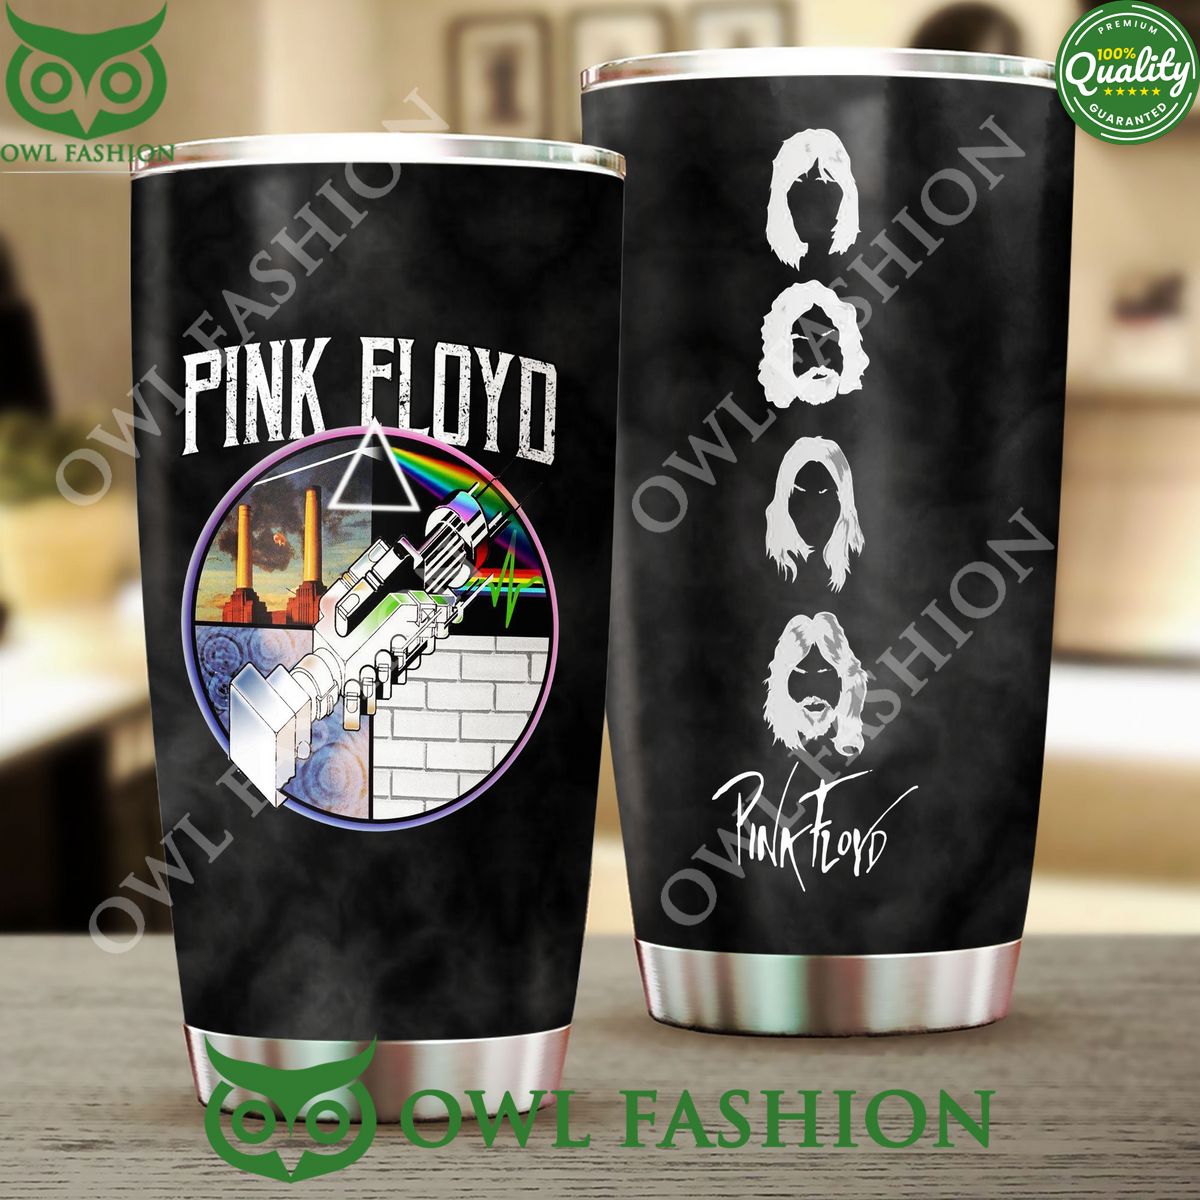 Pink Floyd Member Portrait Black Tumbler Cup It's so aesthetically pleasing.